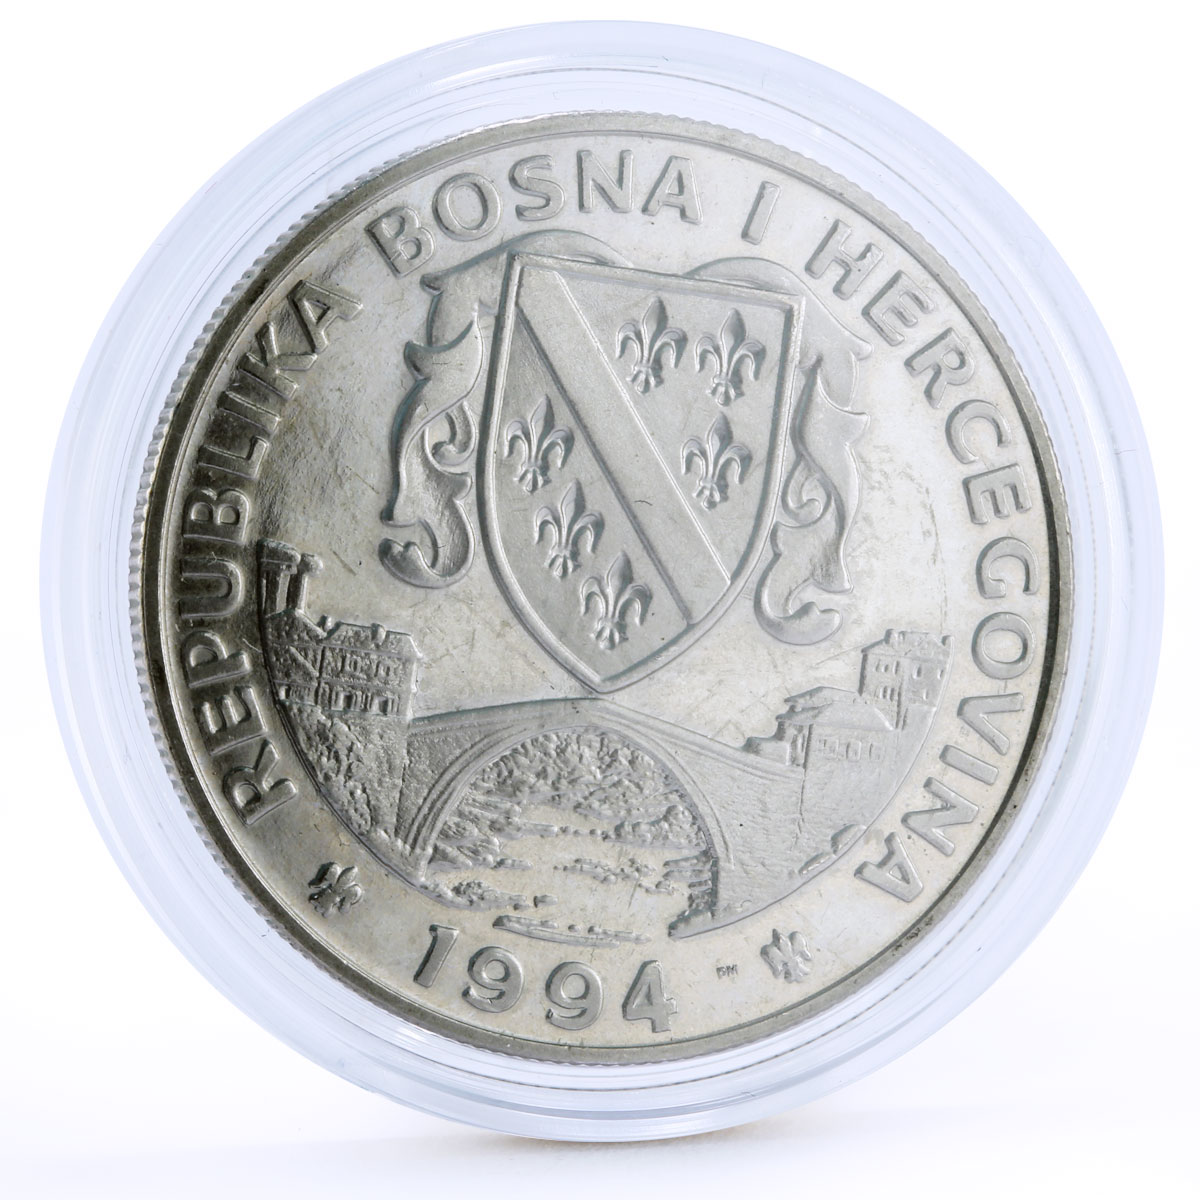 Bosnia and Herzegovina 500 dinara Endangered Wildlife Eohippus CuNi coin 1994